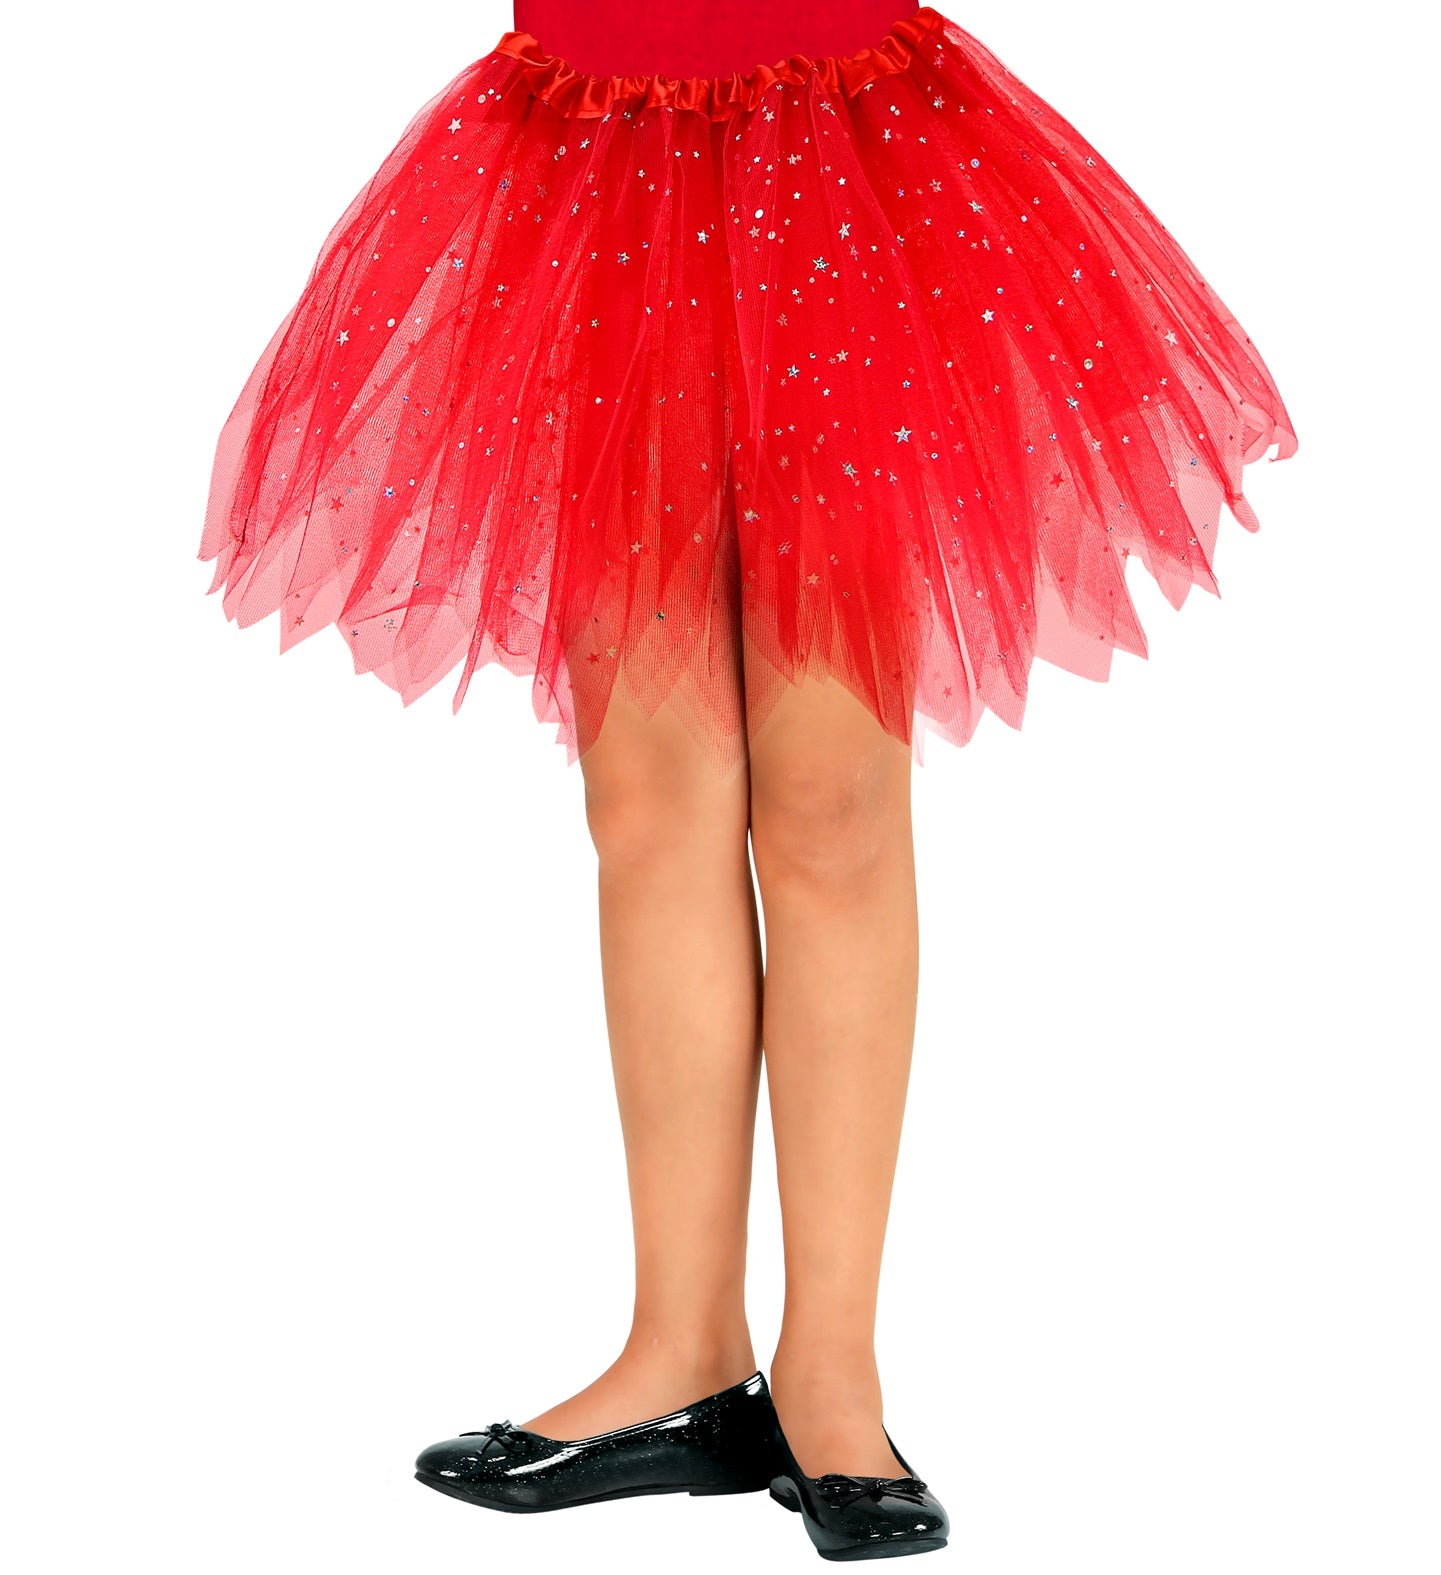 Sparkling Tutu Skirt Red Kids